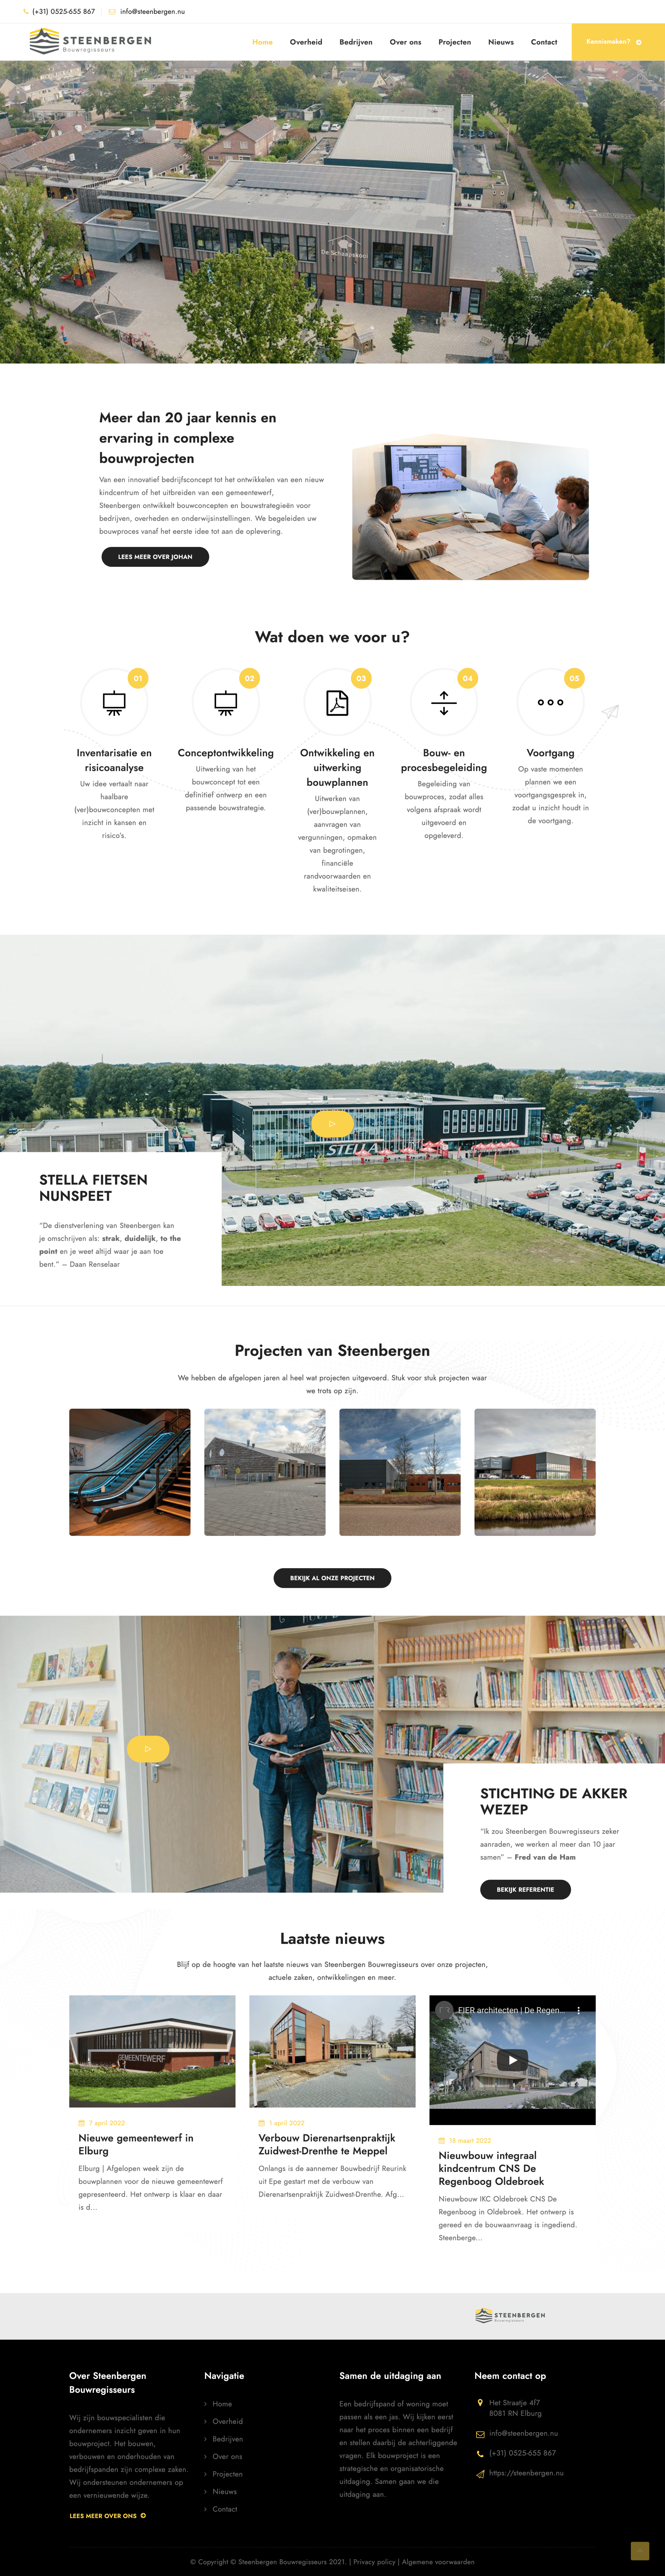 Wordpress website - Steenbergen Bouwregisseurs Elburg